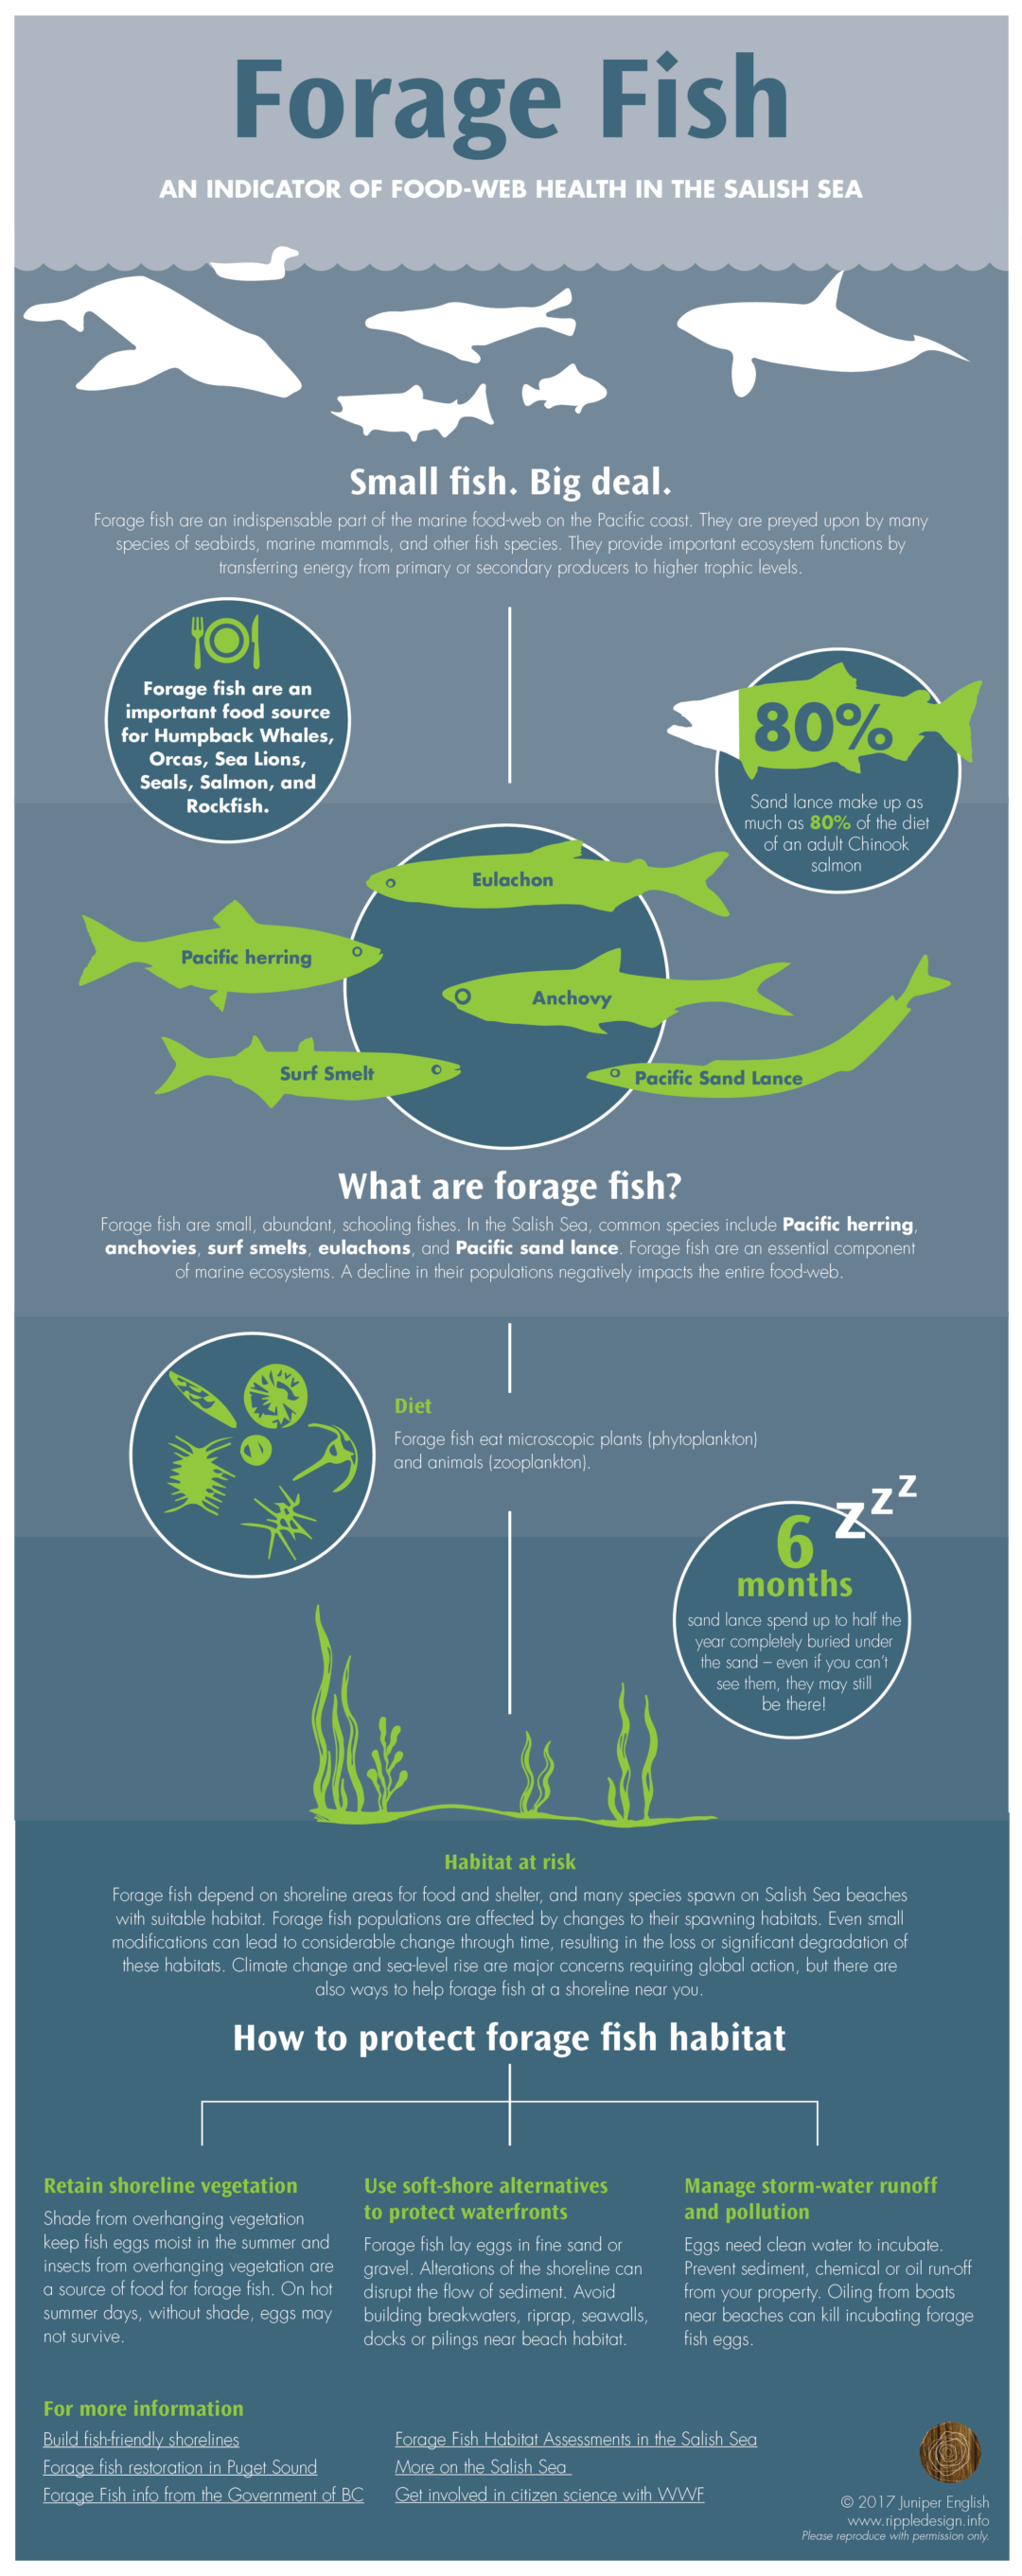 Forage Fish infographic